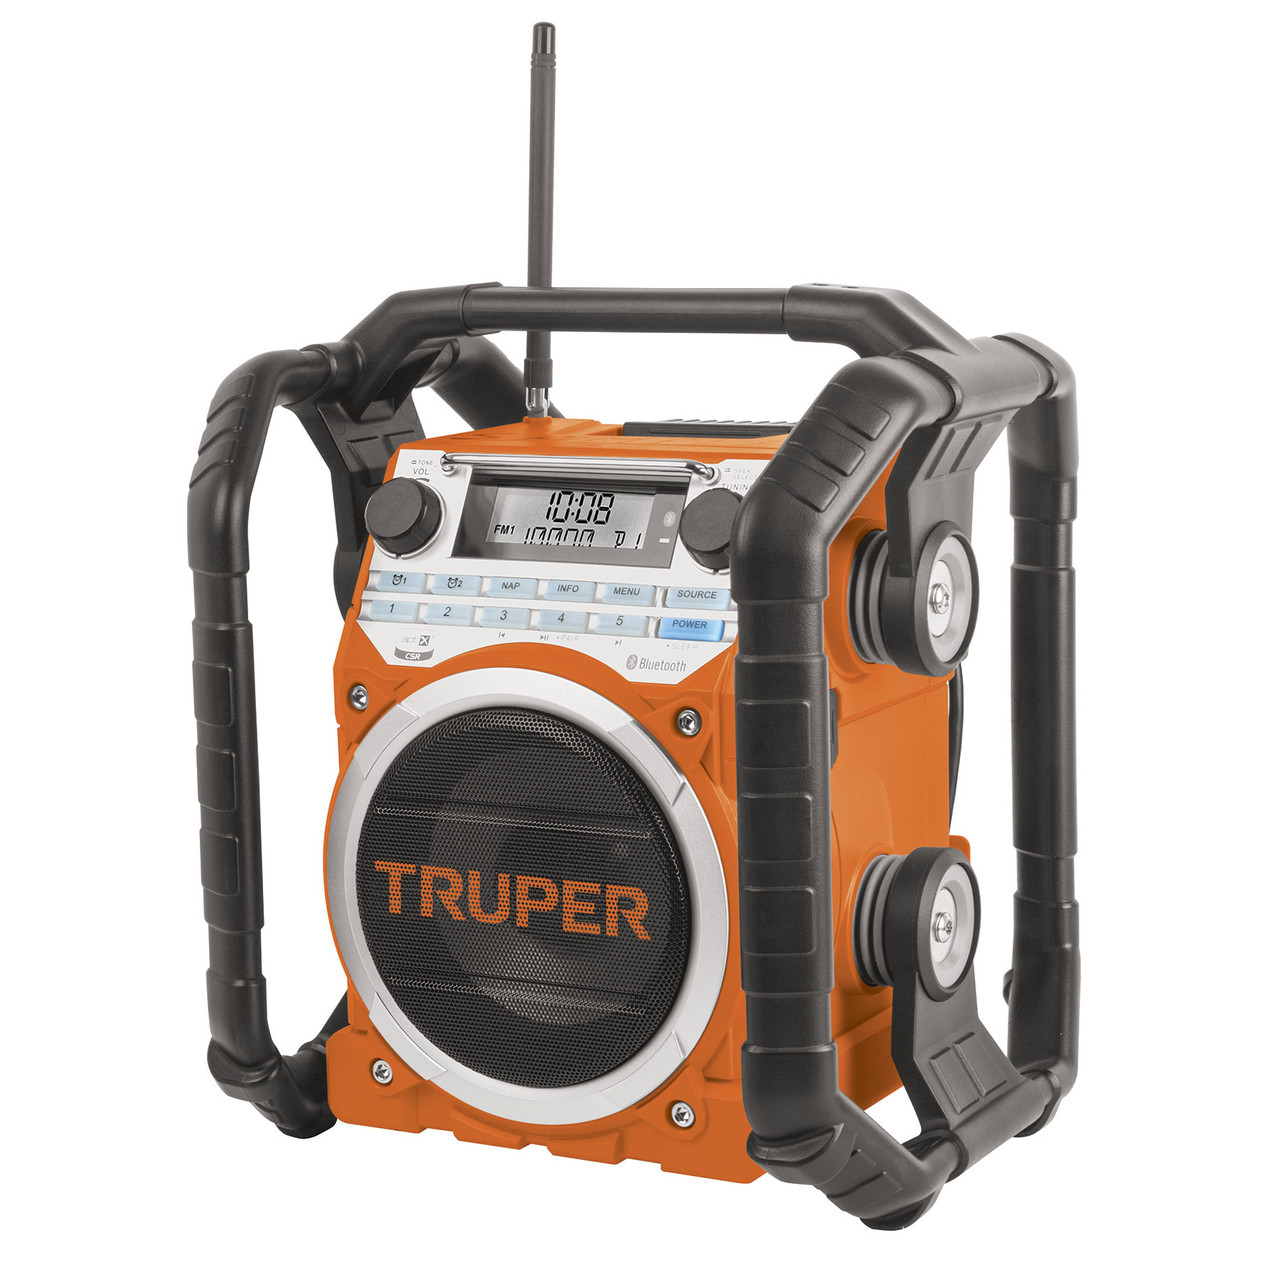 Truper AM/FM Water Resistant Digital Radio #62050